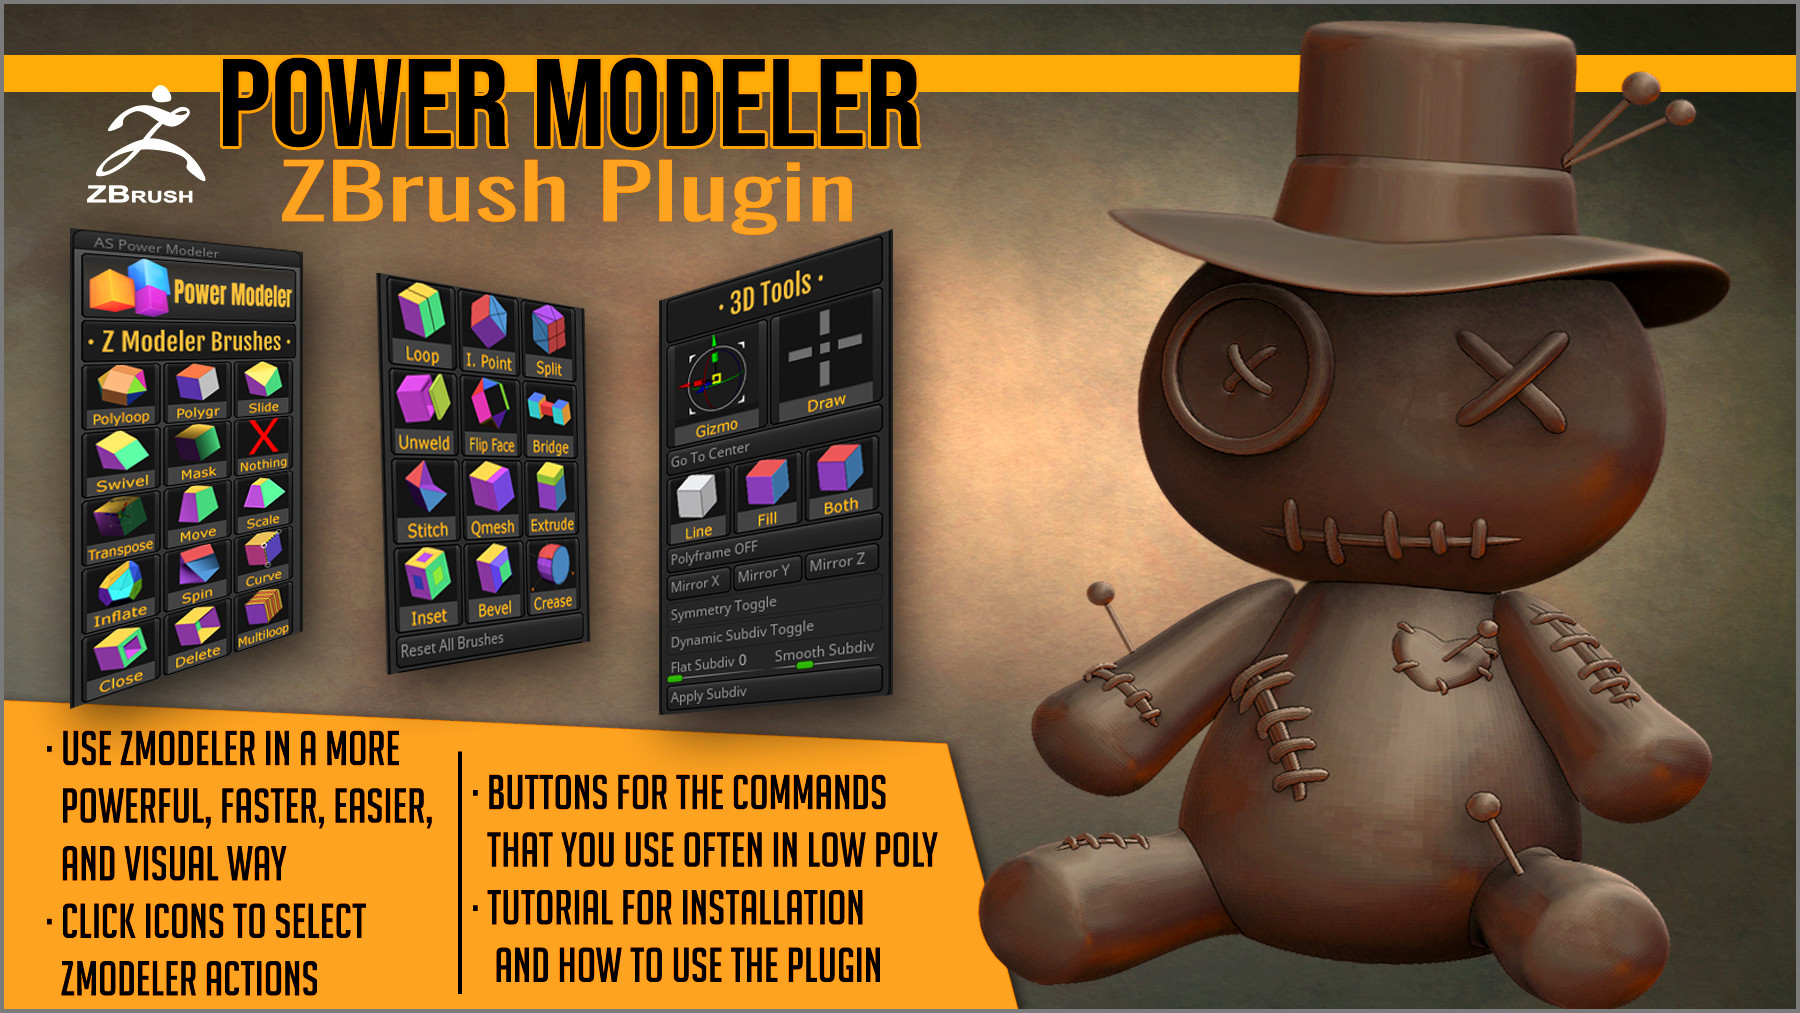 power modeler zbrush plugin